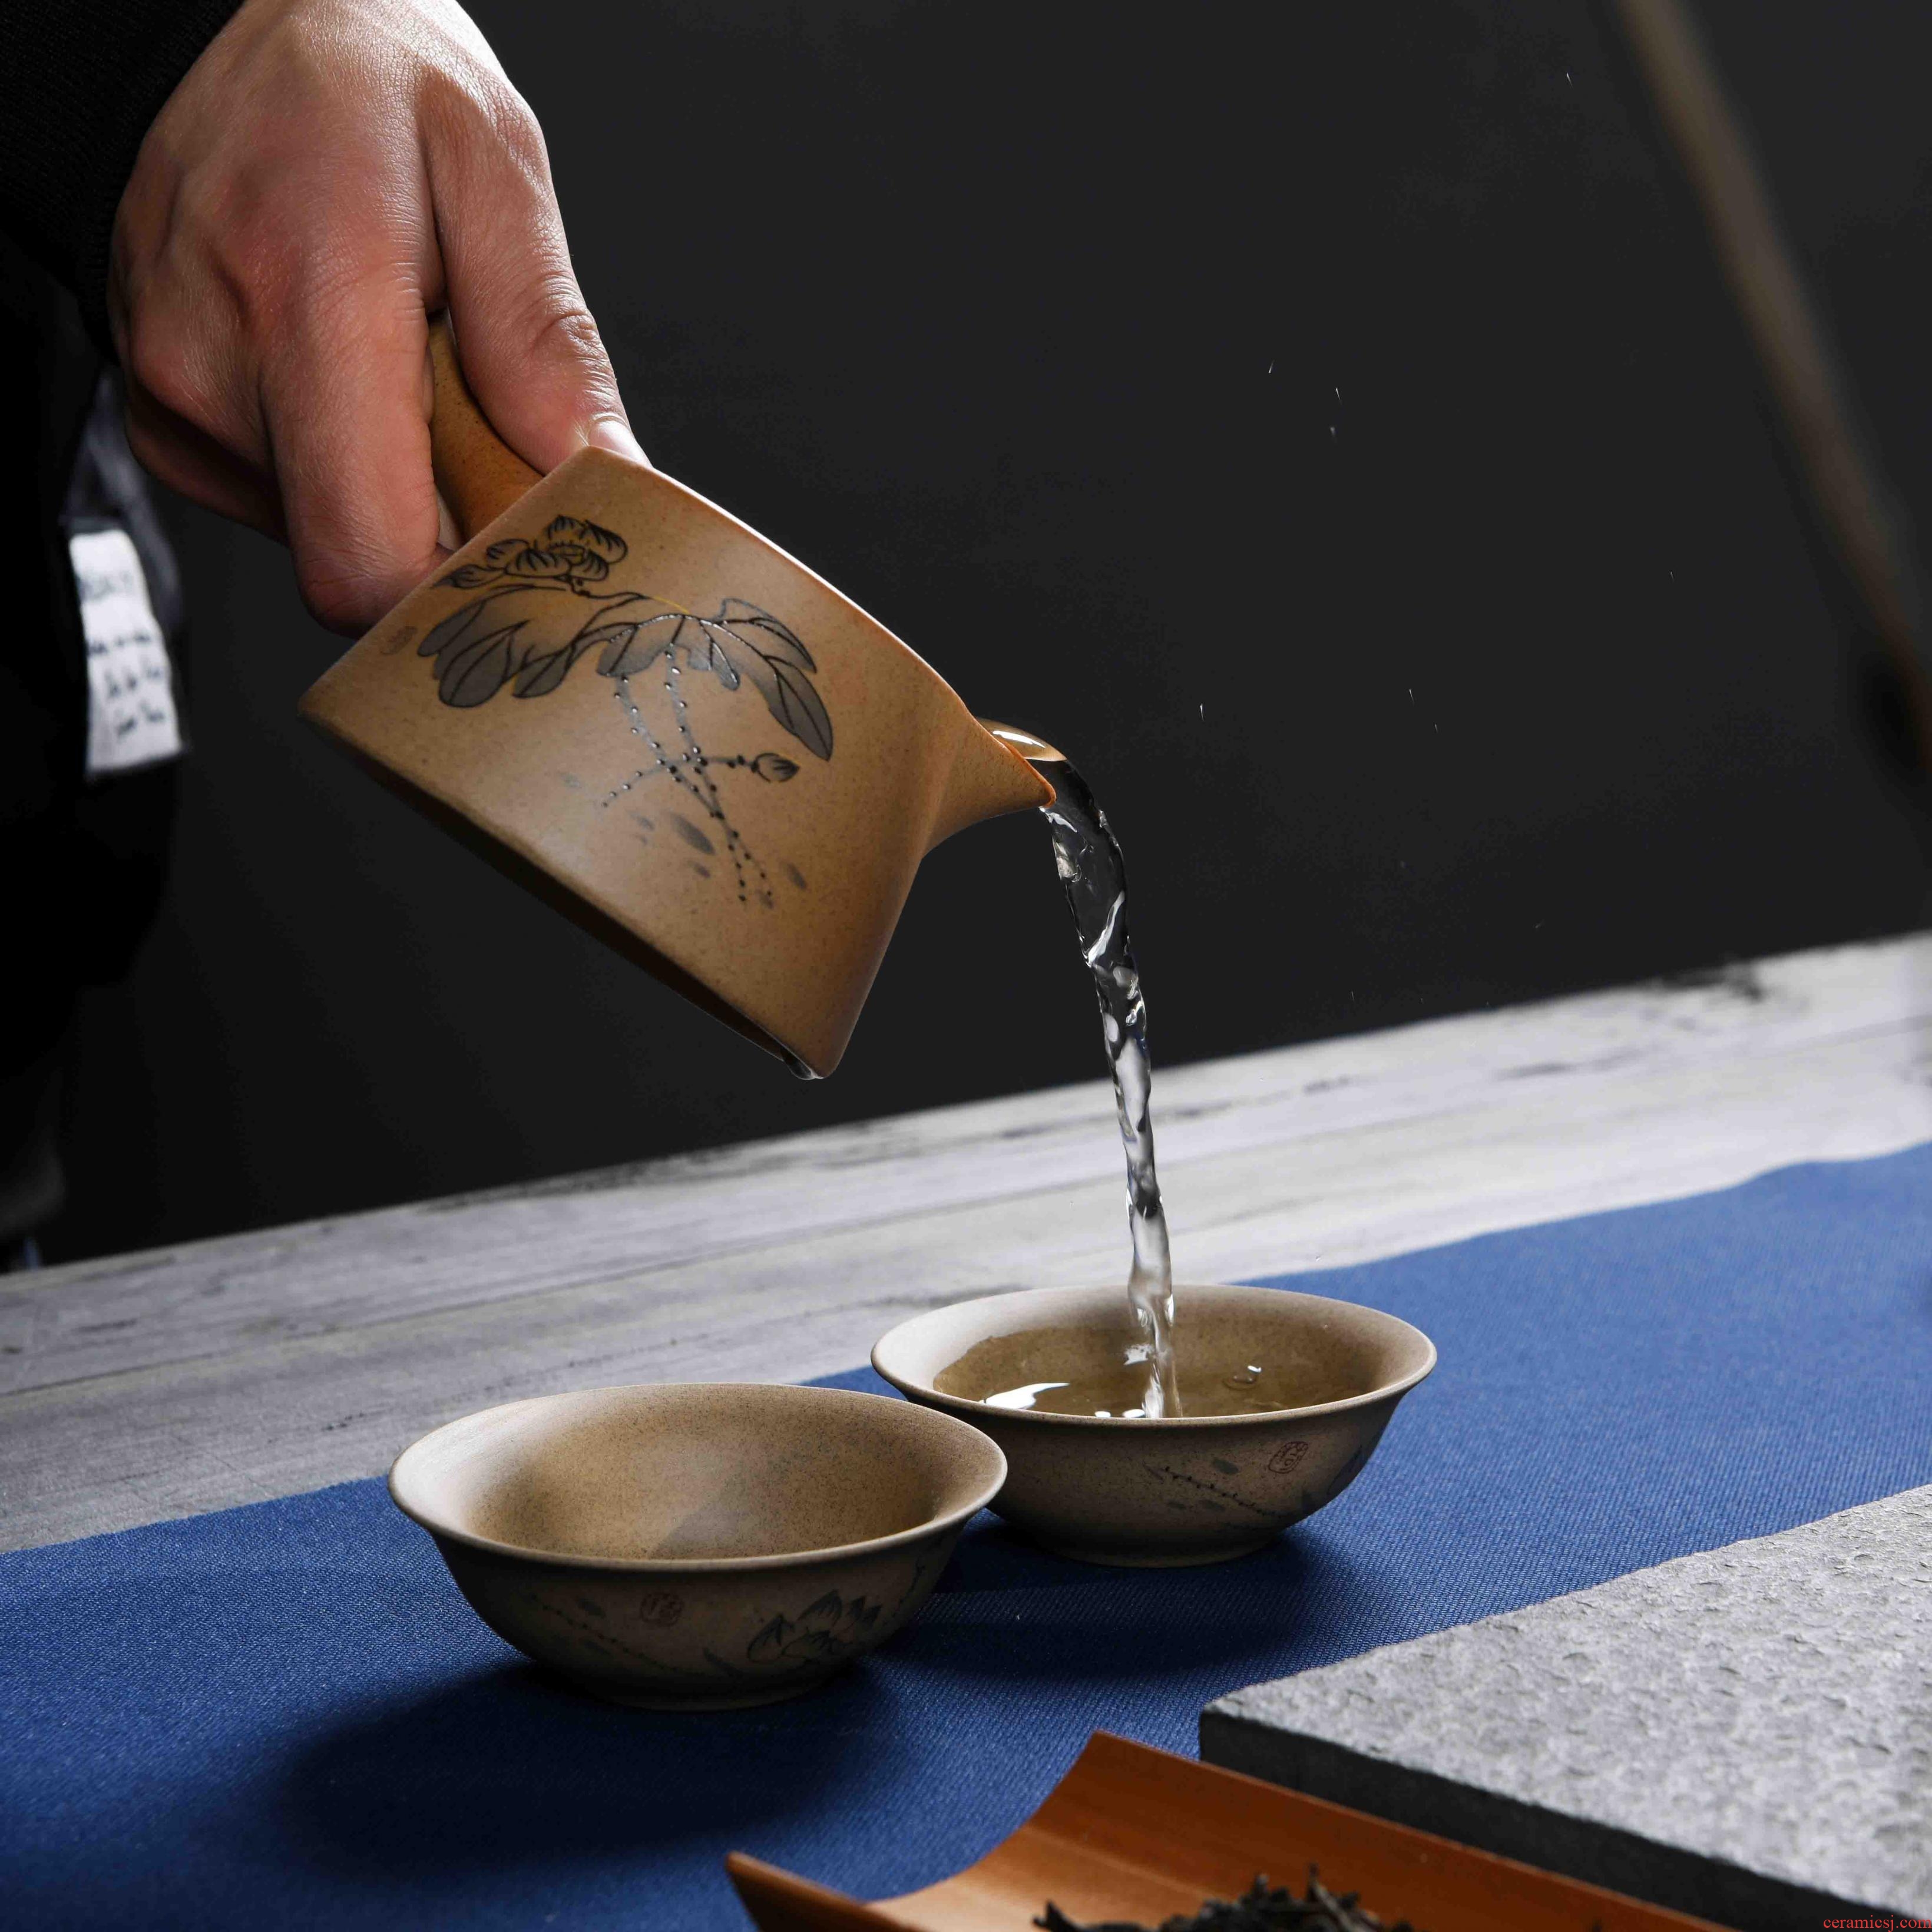 Talk of a complete set of coarse pottery kung fu tea set ceramic cups xi shi pot side put the teapot lid bowl tea set